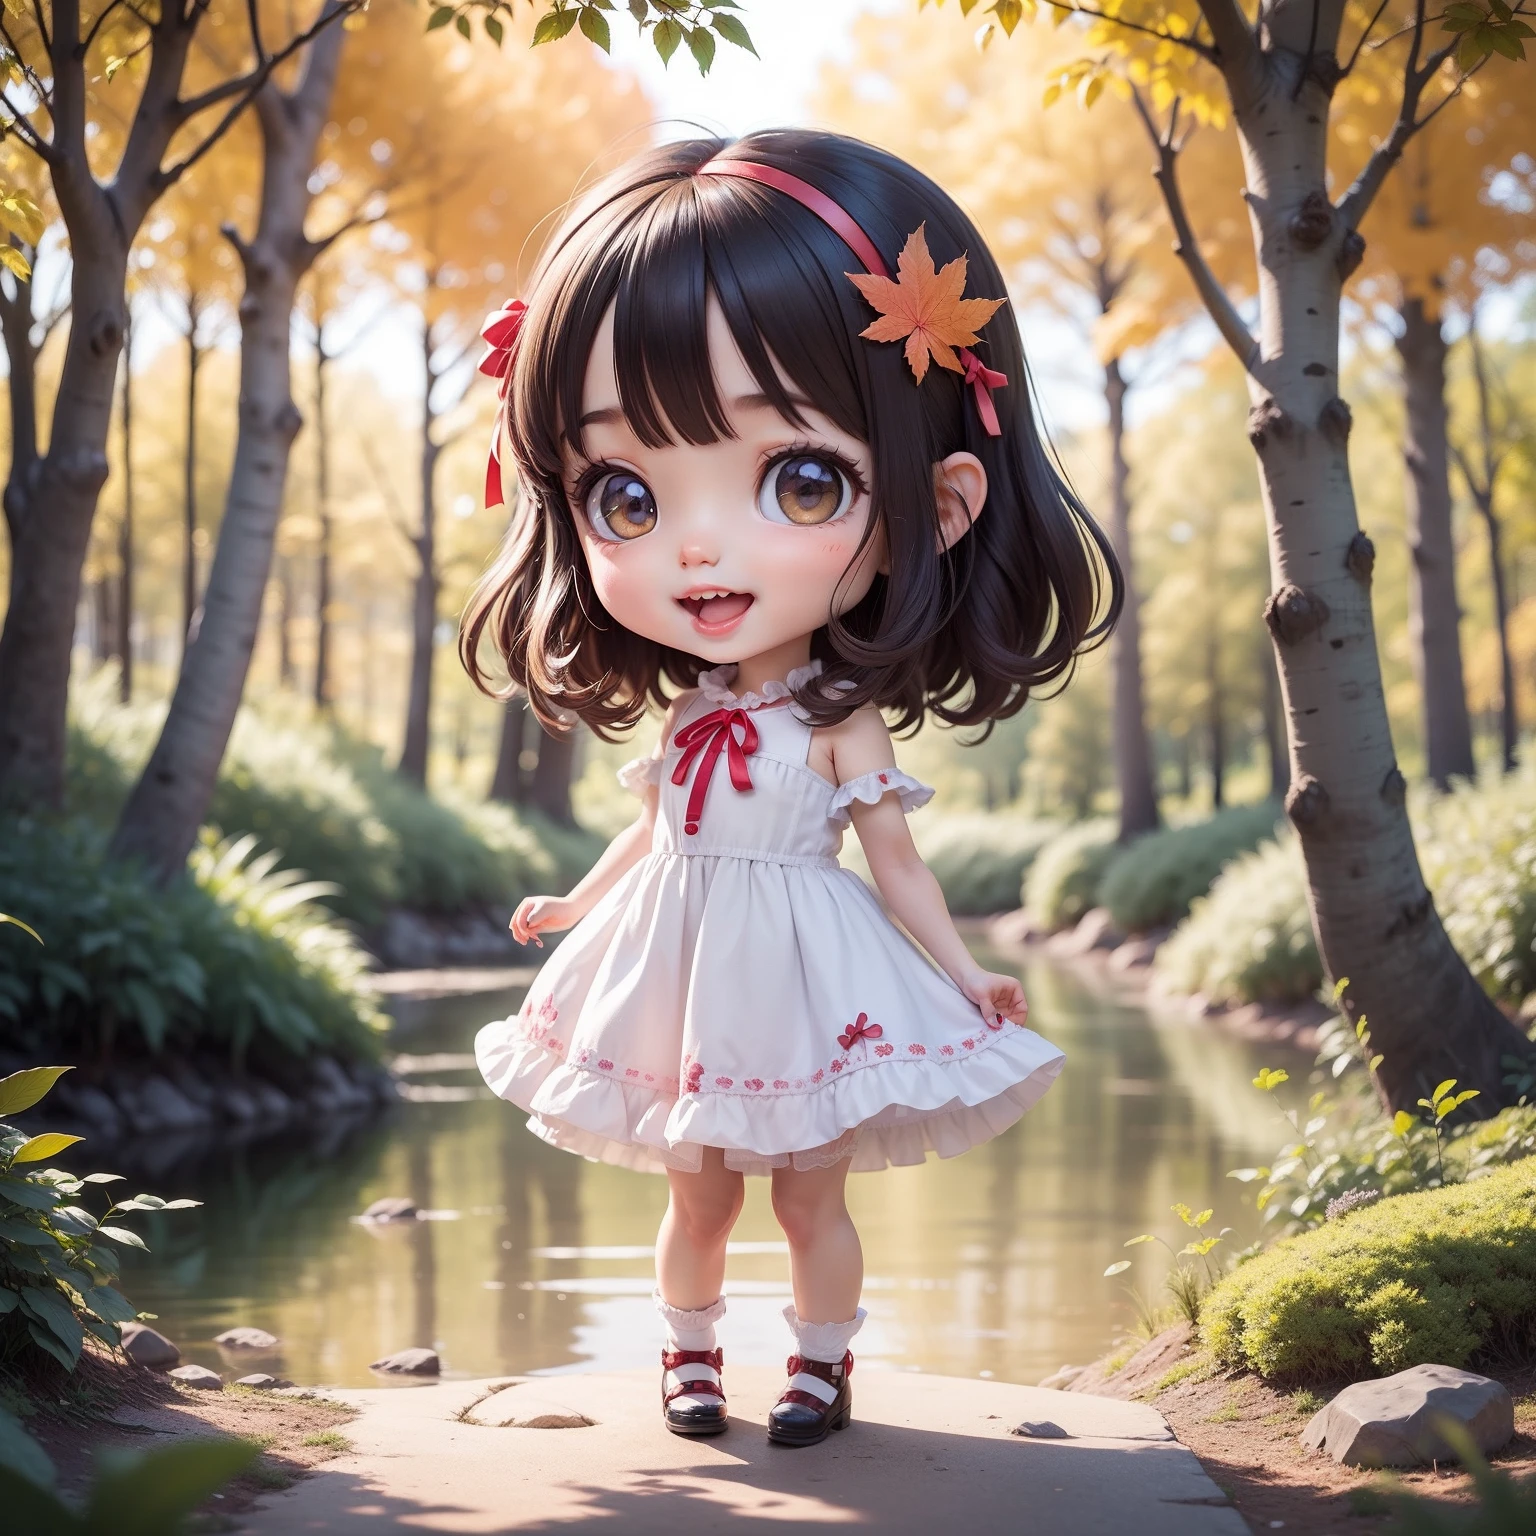 Cute Baby 赤壁 Anime,超級傑作, 頂級品質, 超詳細, 女孩1、（（（赤壁）））、一個黑髮的、時裝模特兒、硬摇滚风格、张开嘴微笑、看著相機、全身照、秋天童話神奇之地的森林和湖泊